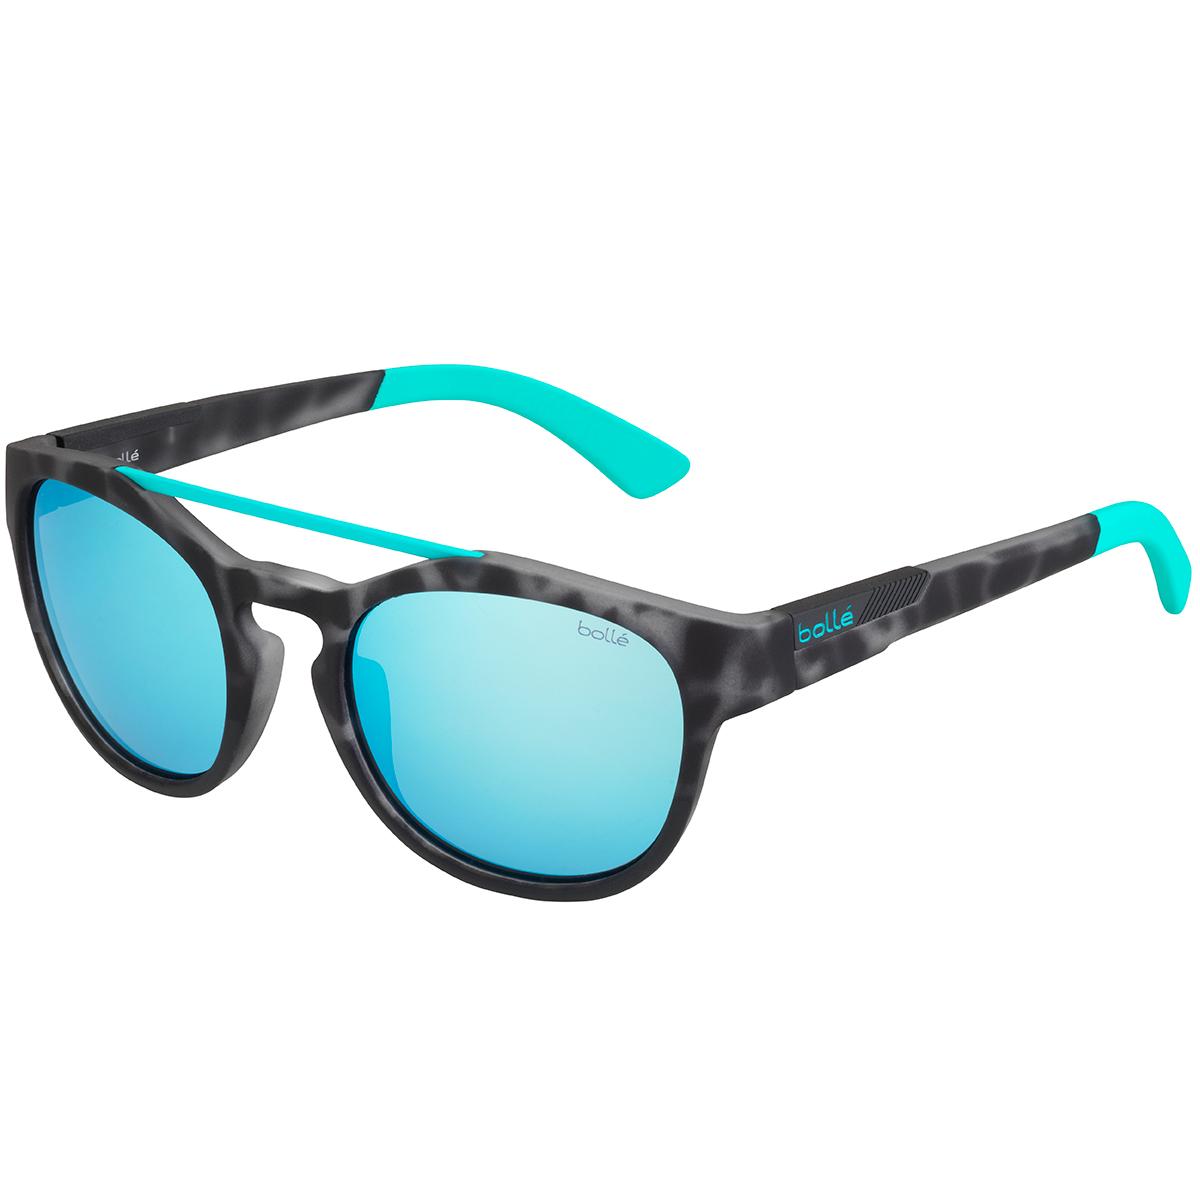 Bolle Boxton Sunglasses  Black Tortoise Pool Soft Medium